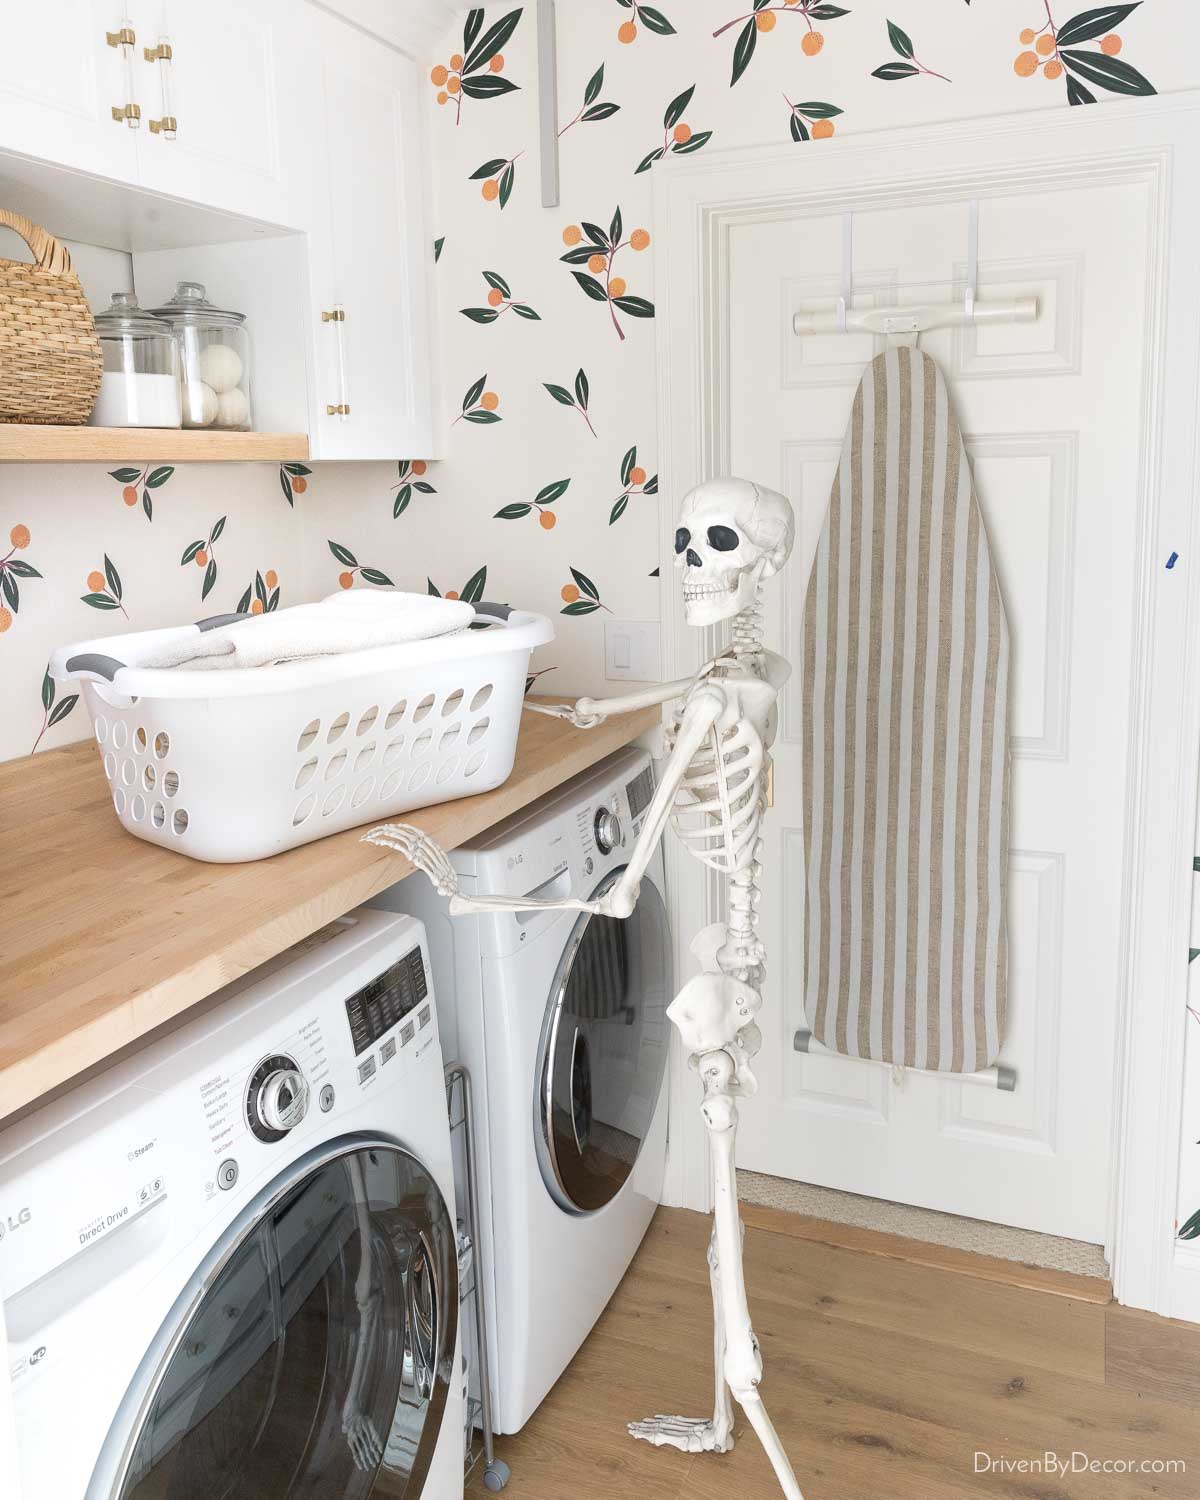 Posable skeleton in laundry room for Halloween